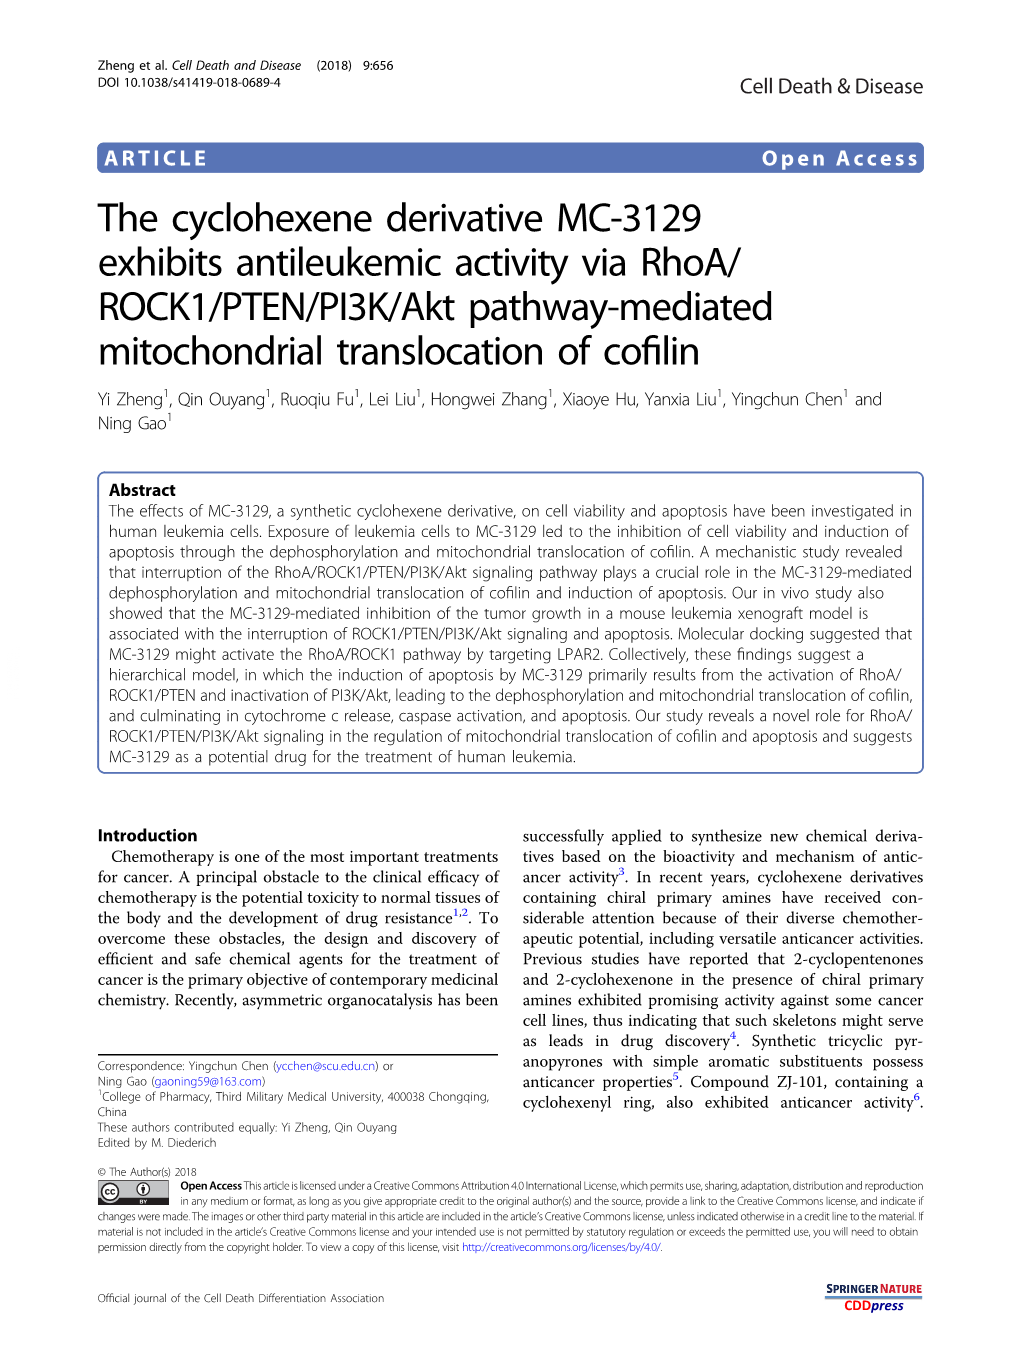 The Cyclohexene Derivative MC-3129 Exhibits Antileukemic Activity Via